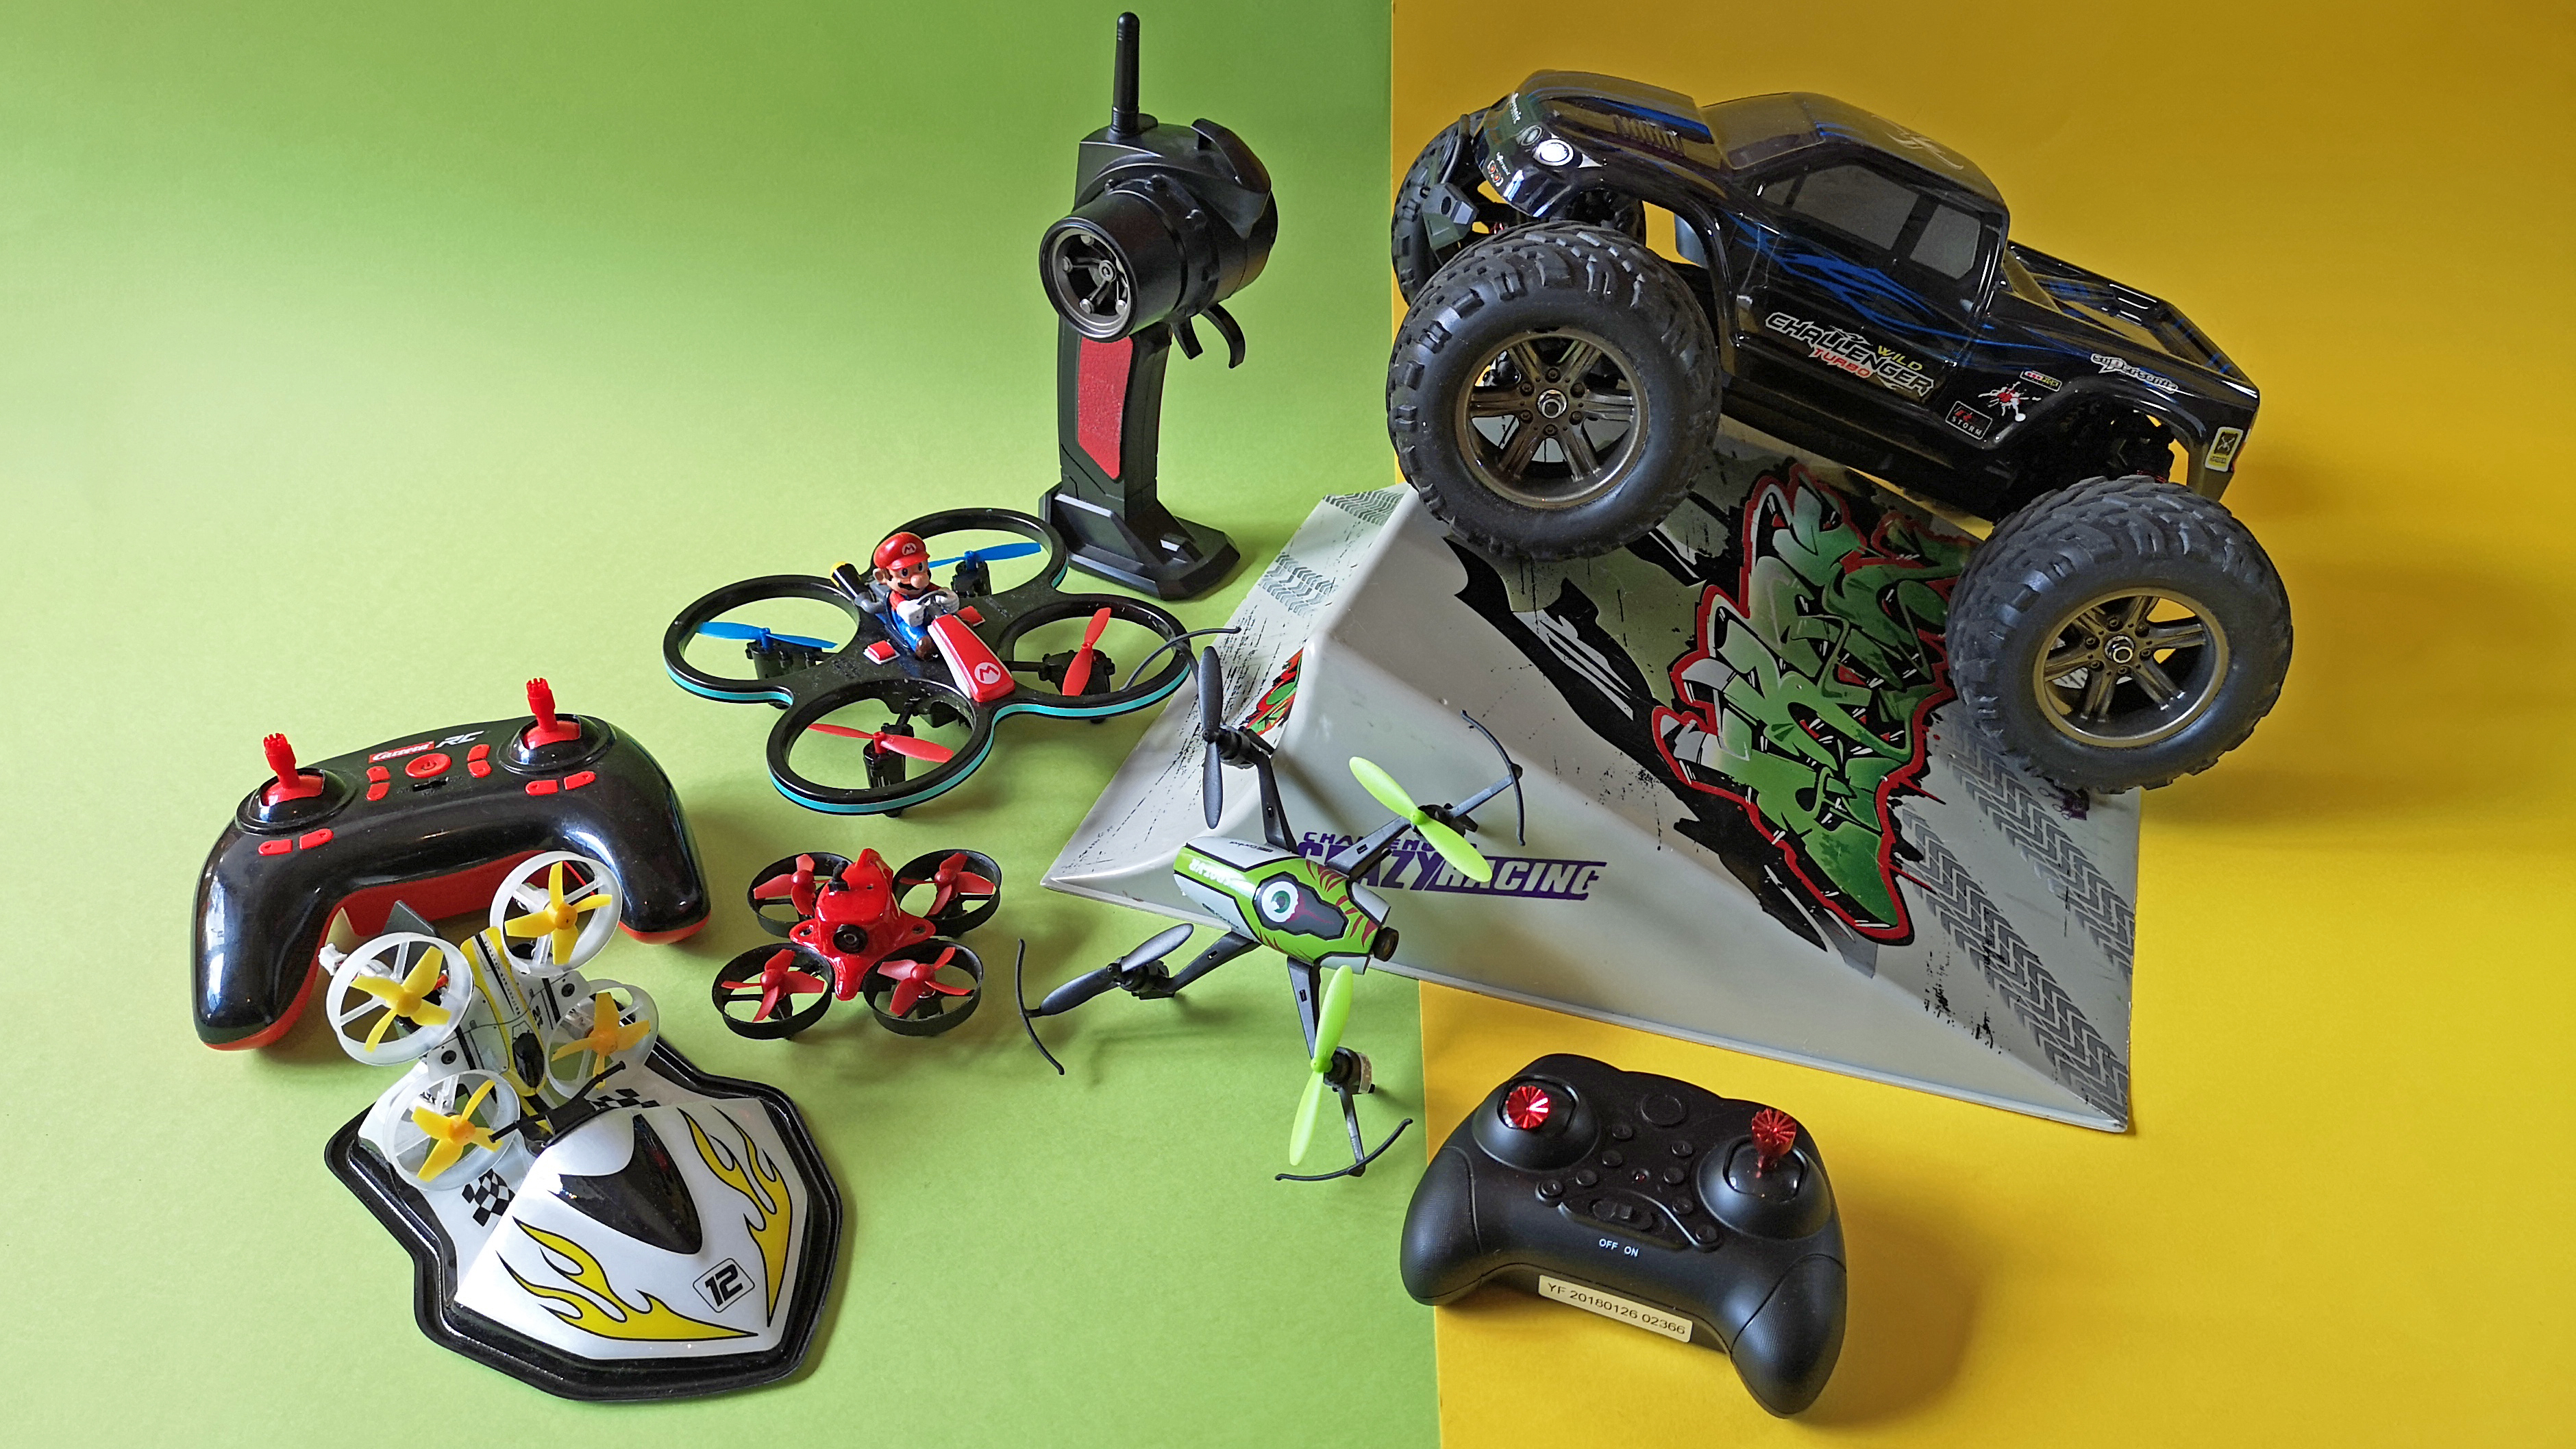 Auto, Boot, Drohne, Flieger & Roboter: Abgefahrenes RC-Spielzeug bis 50  Euro | TechStage